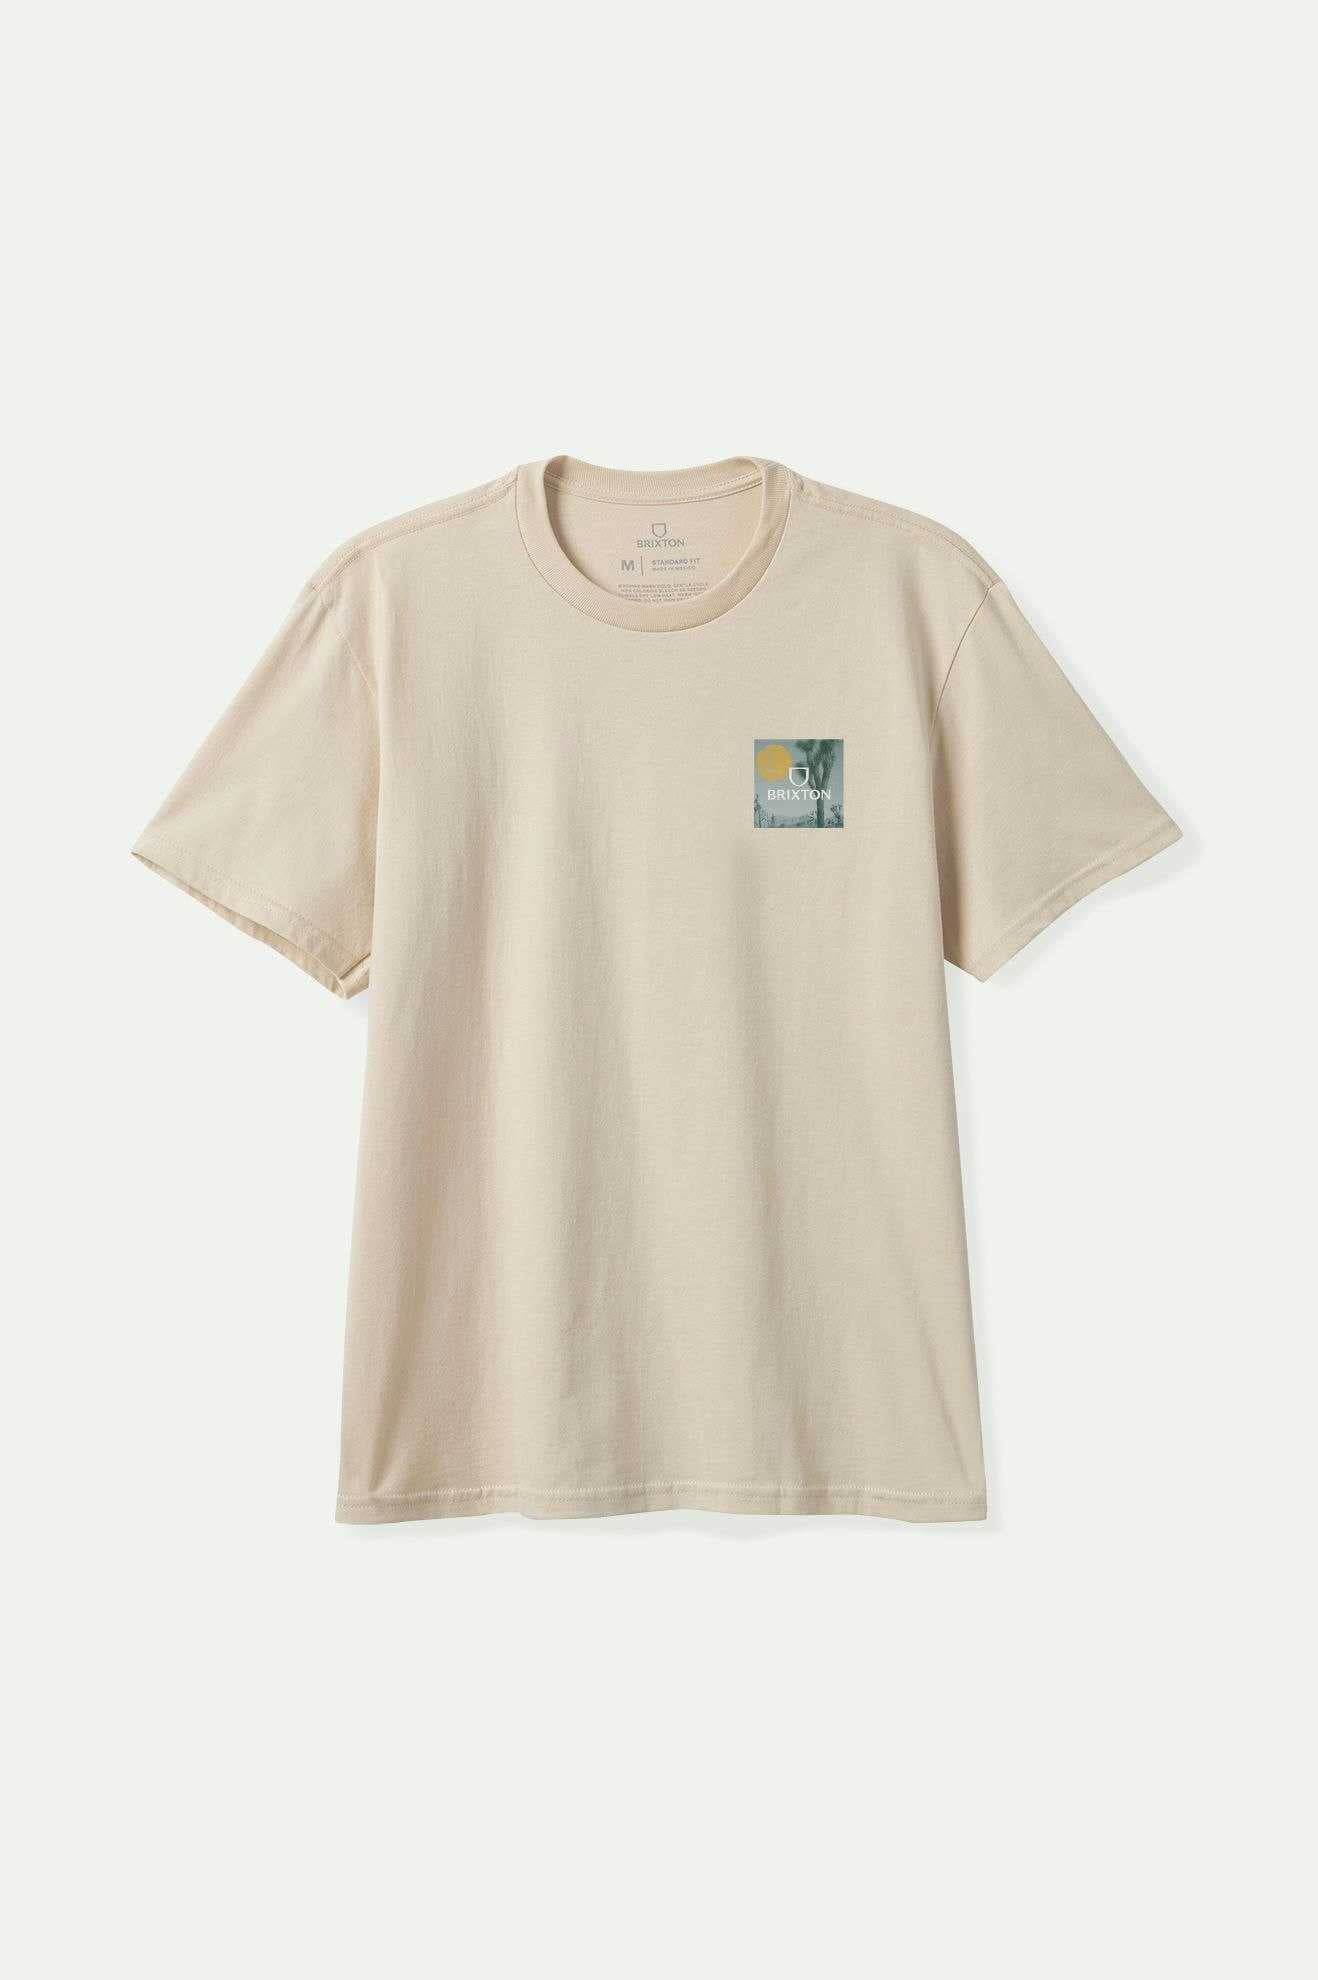 Brixton Men's Alpha Square S/S Standard T-Shirt - Cream/Off White/Gold | Profile